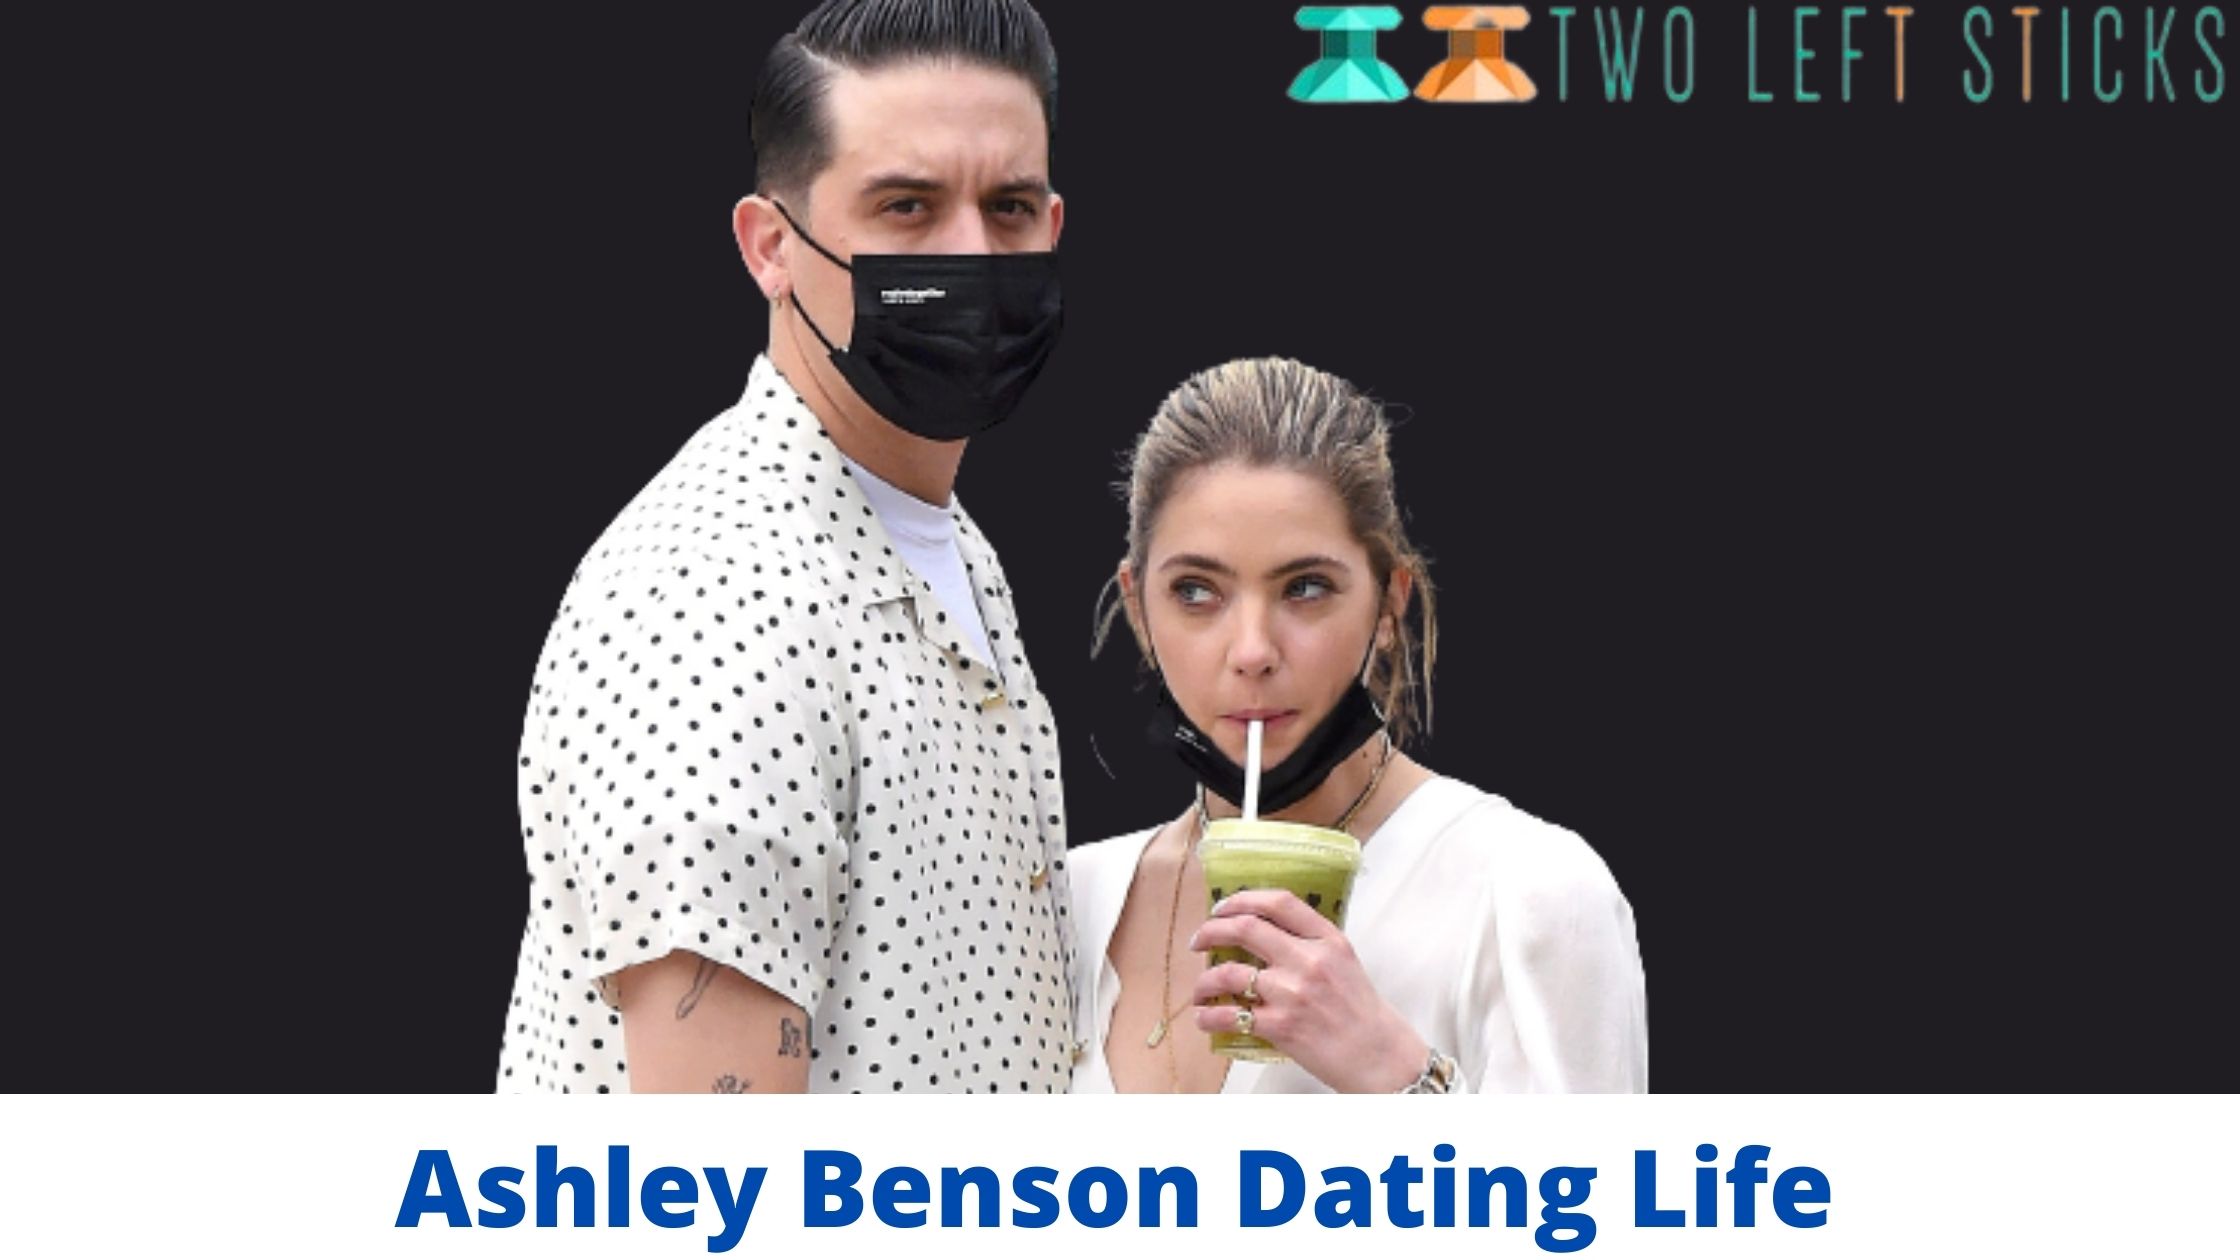 Ashley Benson Dating Life- Cara Delevingne and She have broken up!